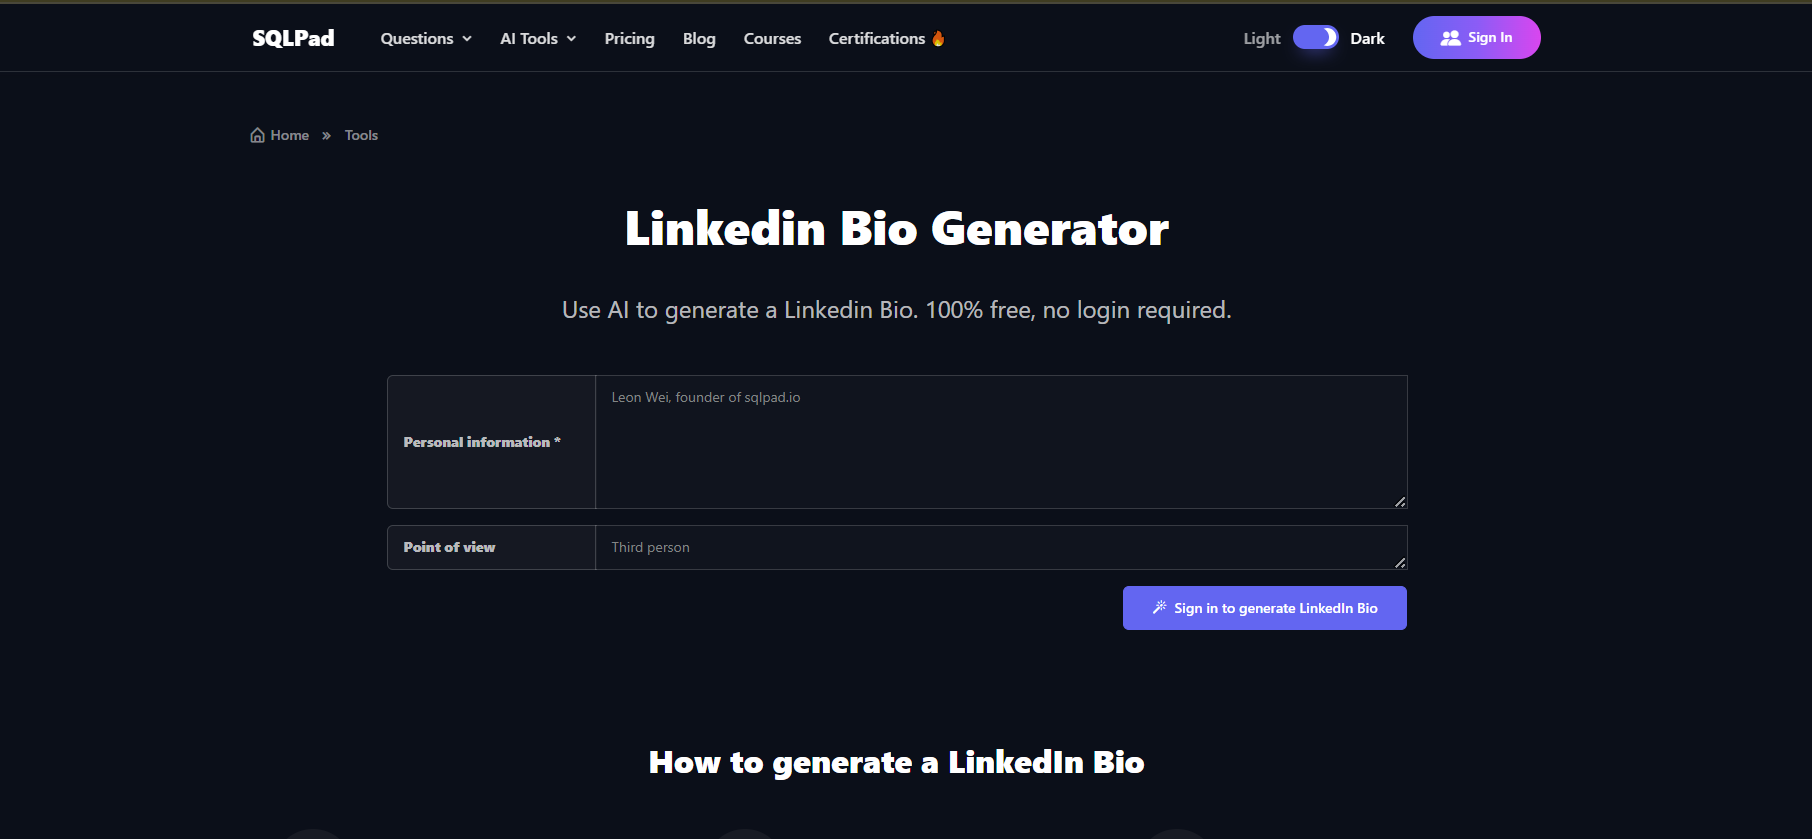 LinkedIn bio generator 09. SQLPad 